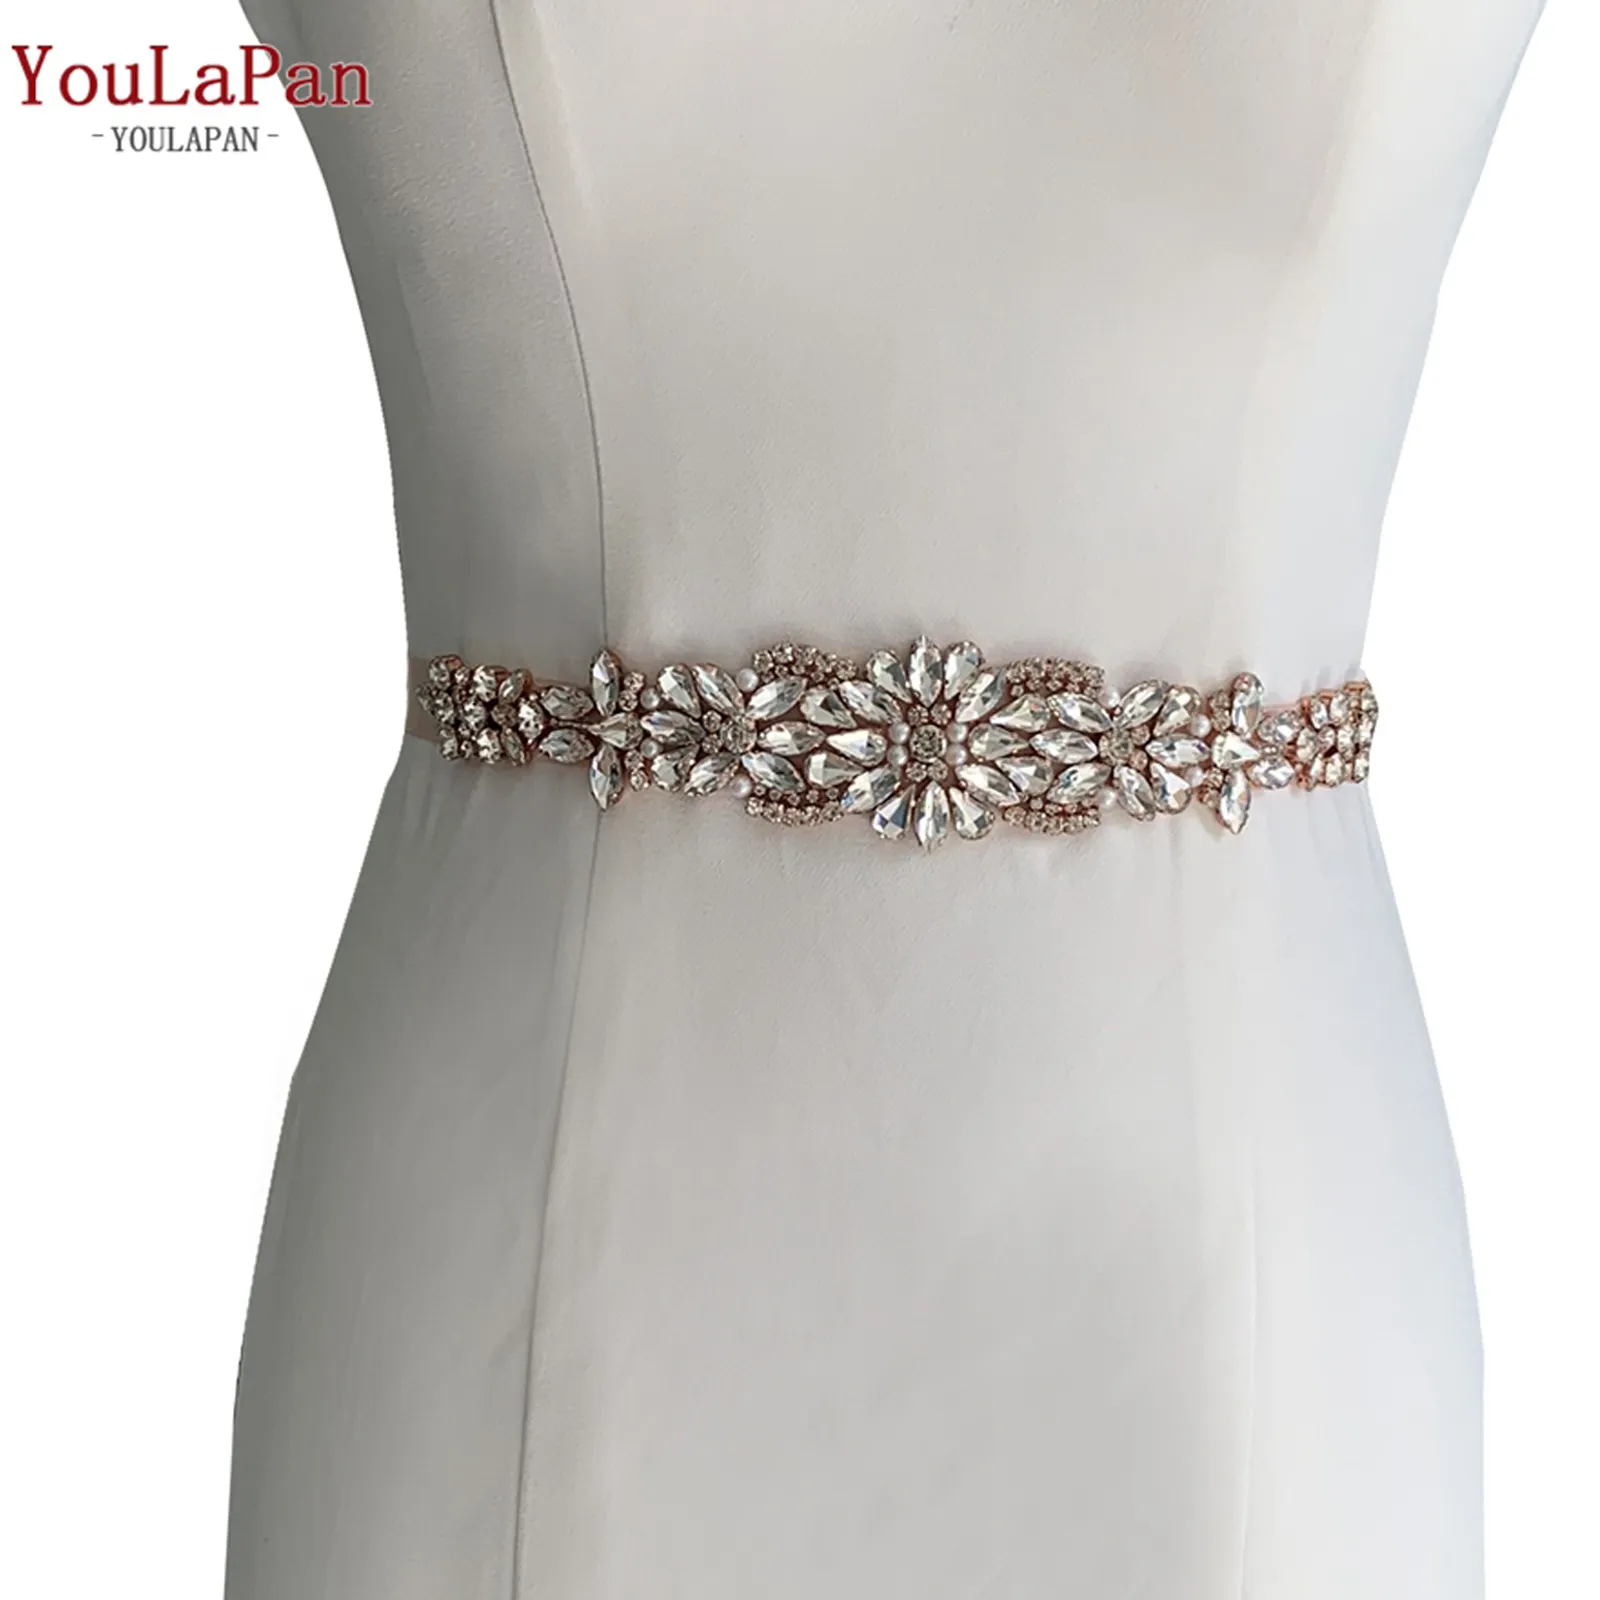 YouLaPan S423 Fashion Design Rose Gold Rhinestone Belt Banquet Evening Dress Sash Belt Wedding Gift Bridal Wedding Dress Belt